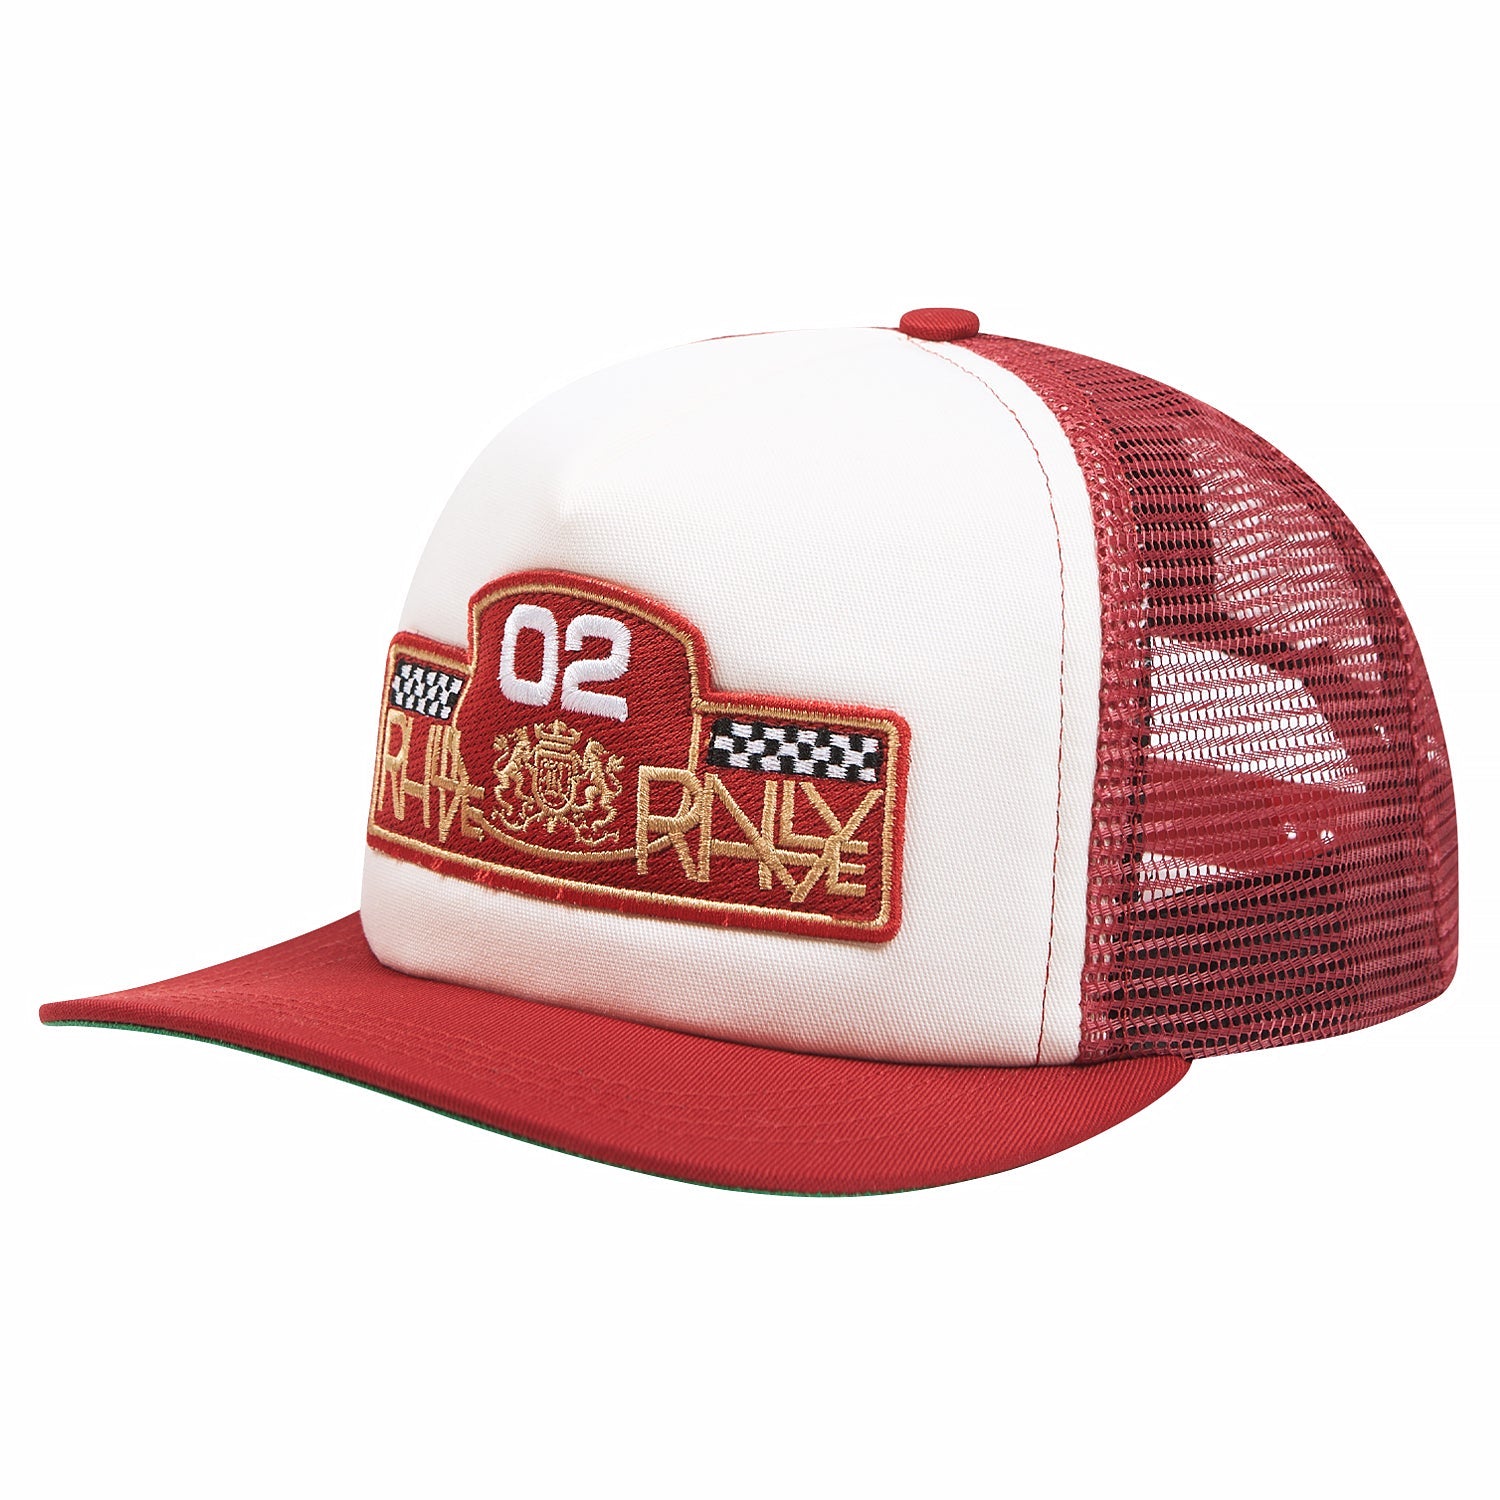 Rpix Hat | – Rally NYC Trucker White/Red Capsule